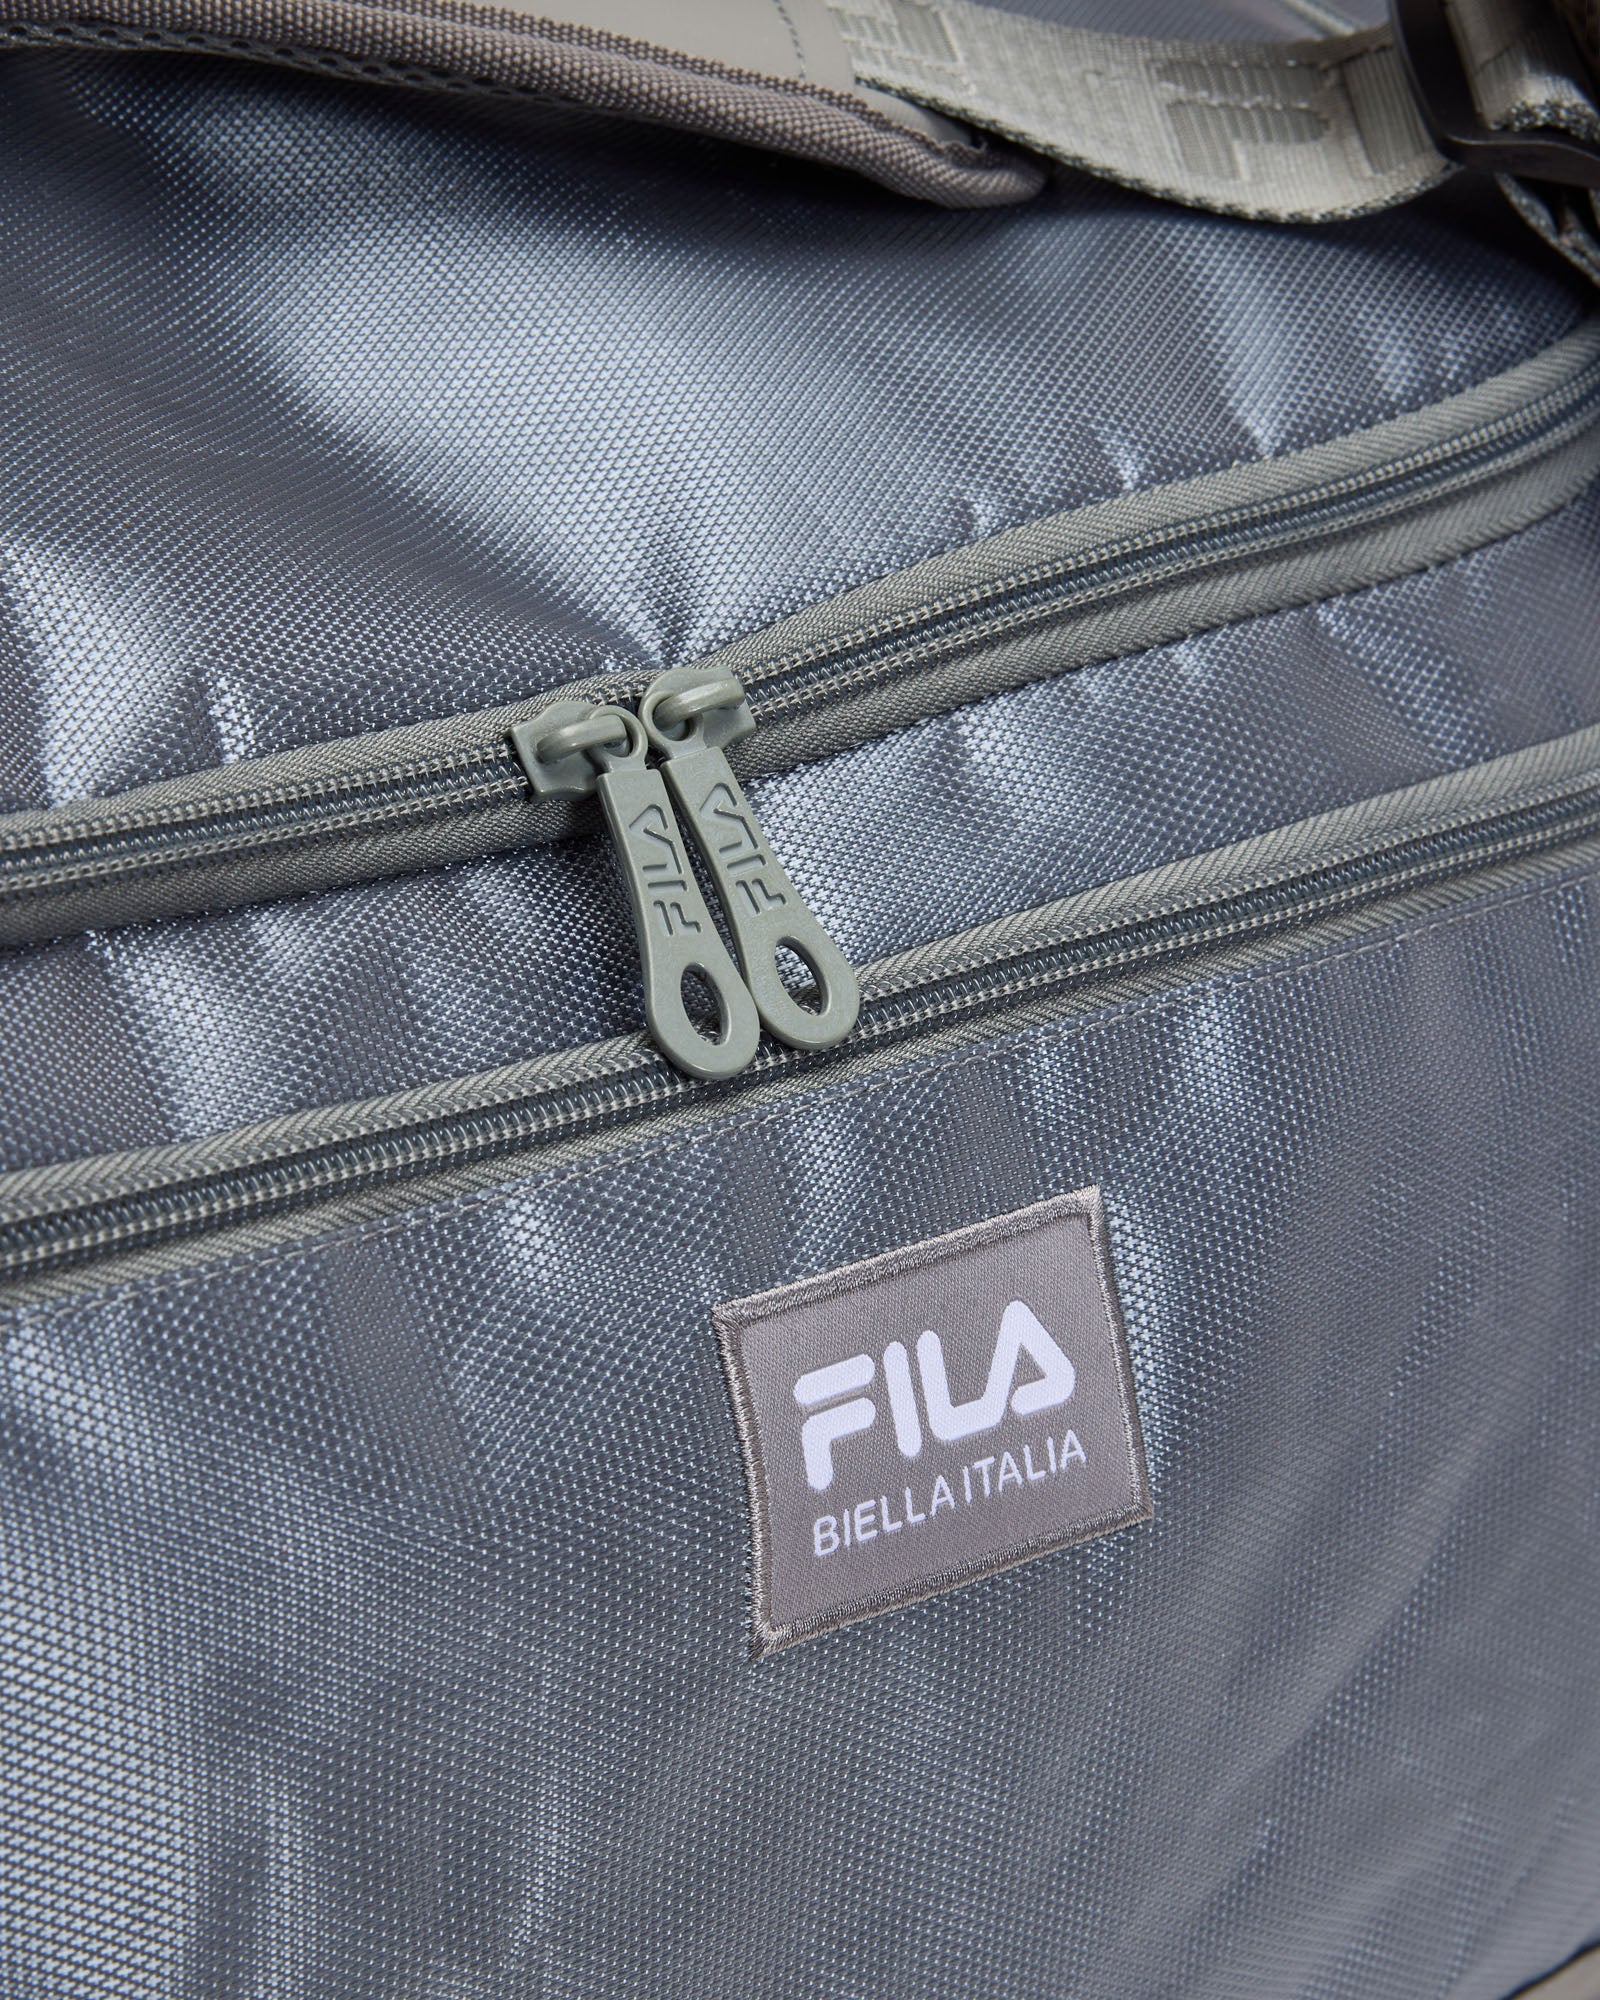 Bowers Duffle Bag | FILA Australia